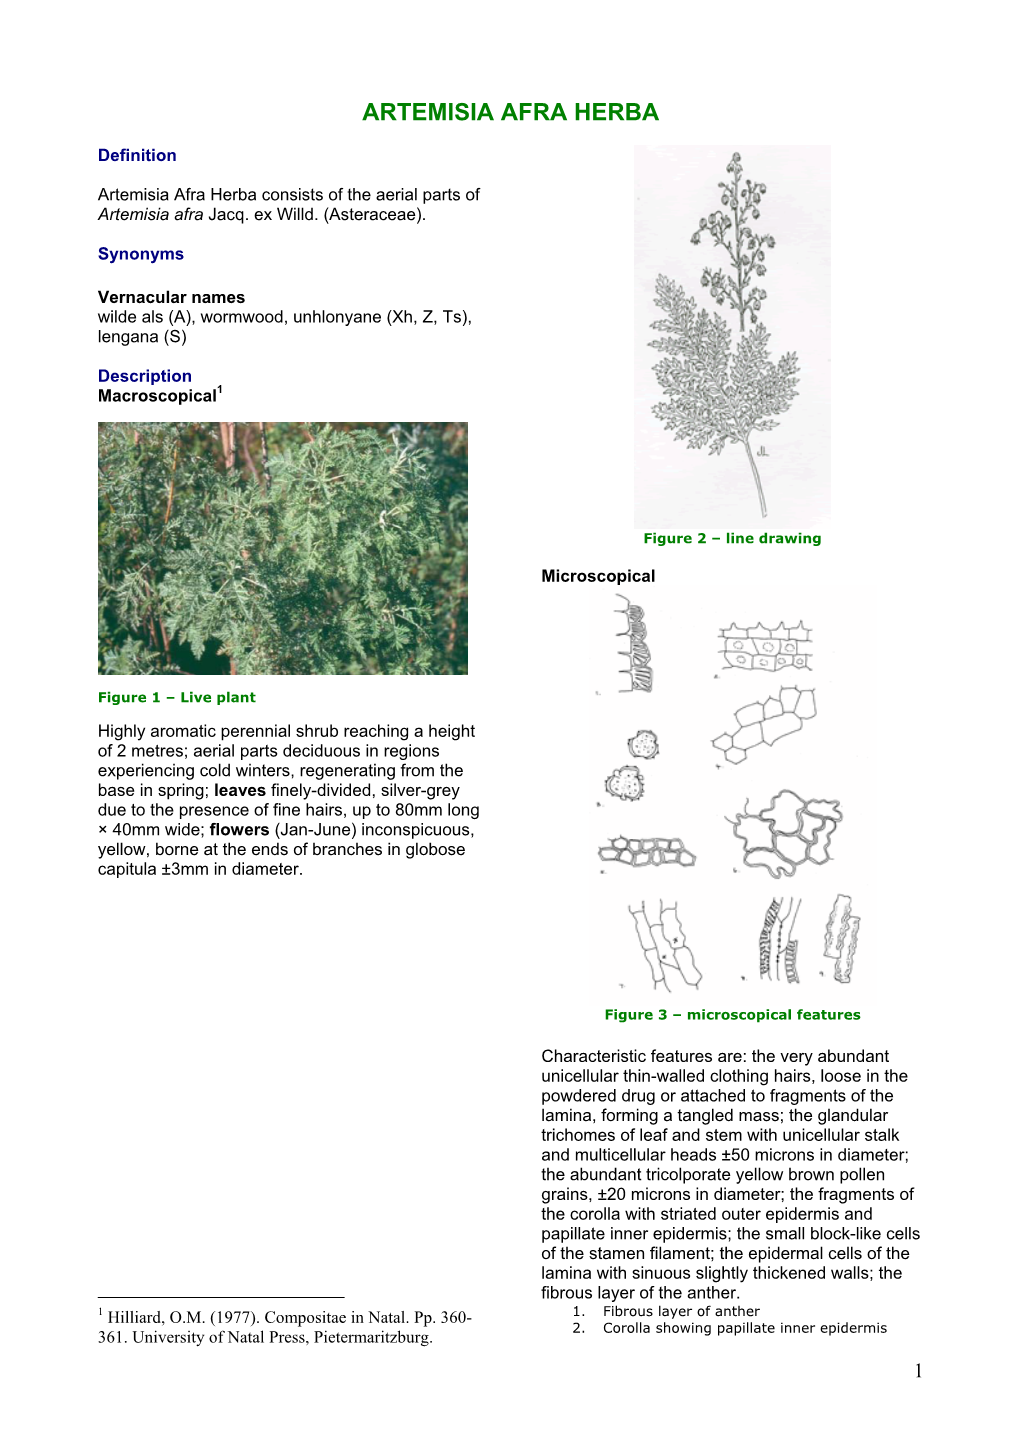 Artemisia Afra Herba